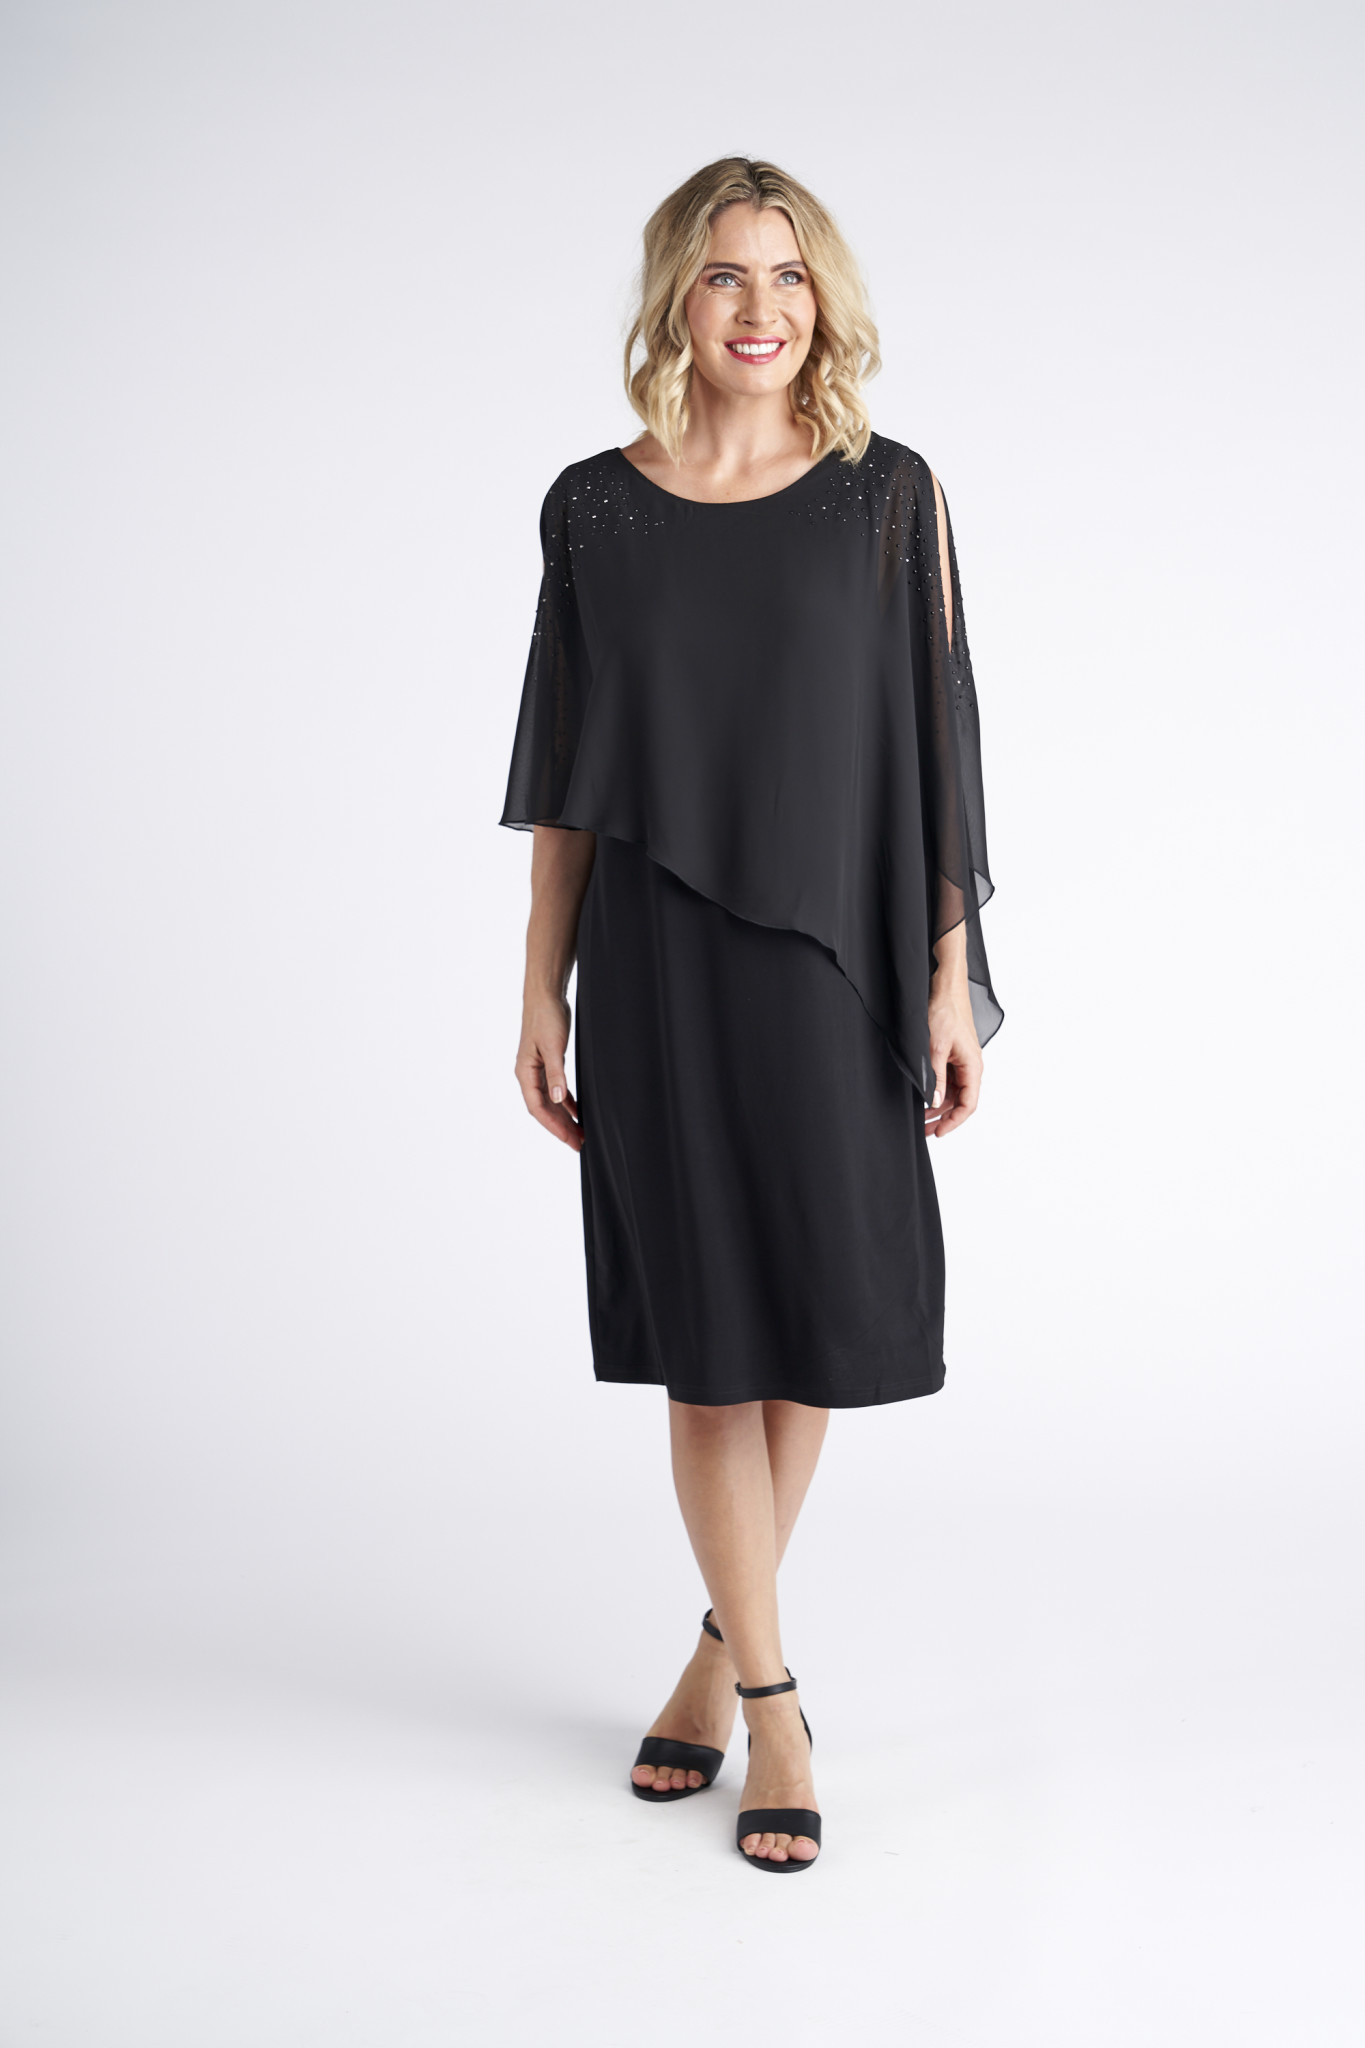 Black Chiffon Sparkle Overlay & Jersey Dress - One Plus One Fashion